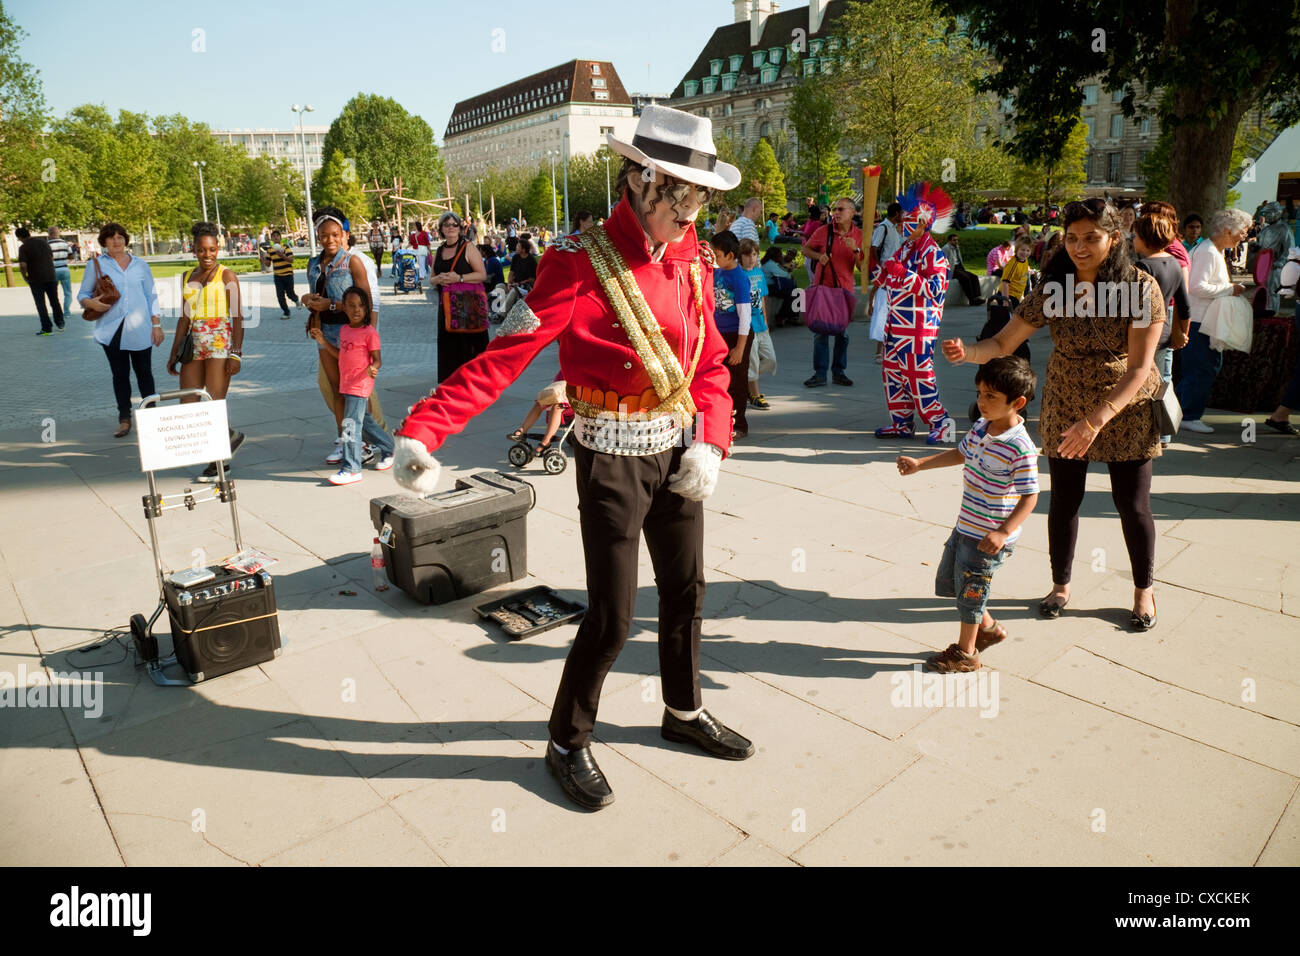 Michael Jackson Lookalike Straßenkünstler tanzen, South Bank, London UK Stockfoto